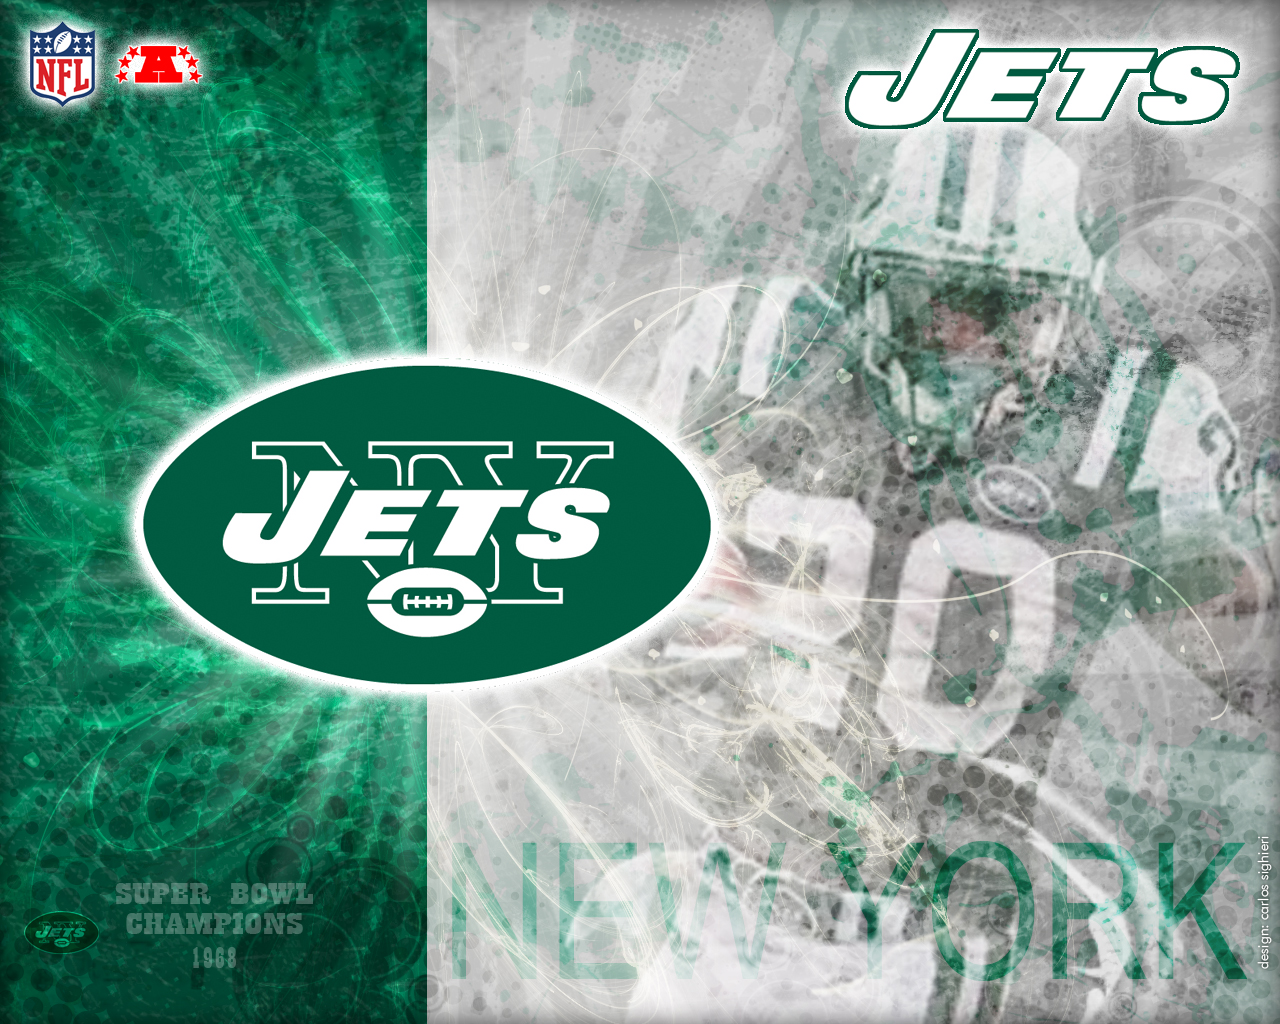  New York Jets wallpaper desktop background New York Jets wallpapers